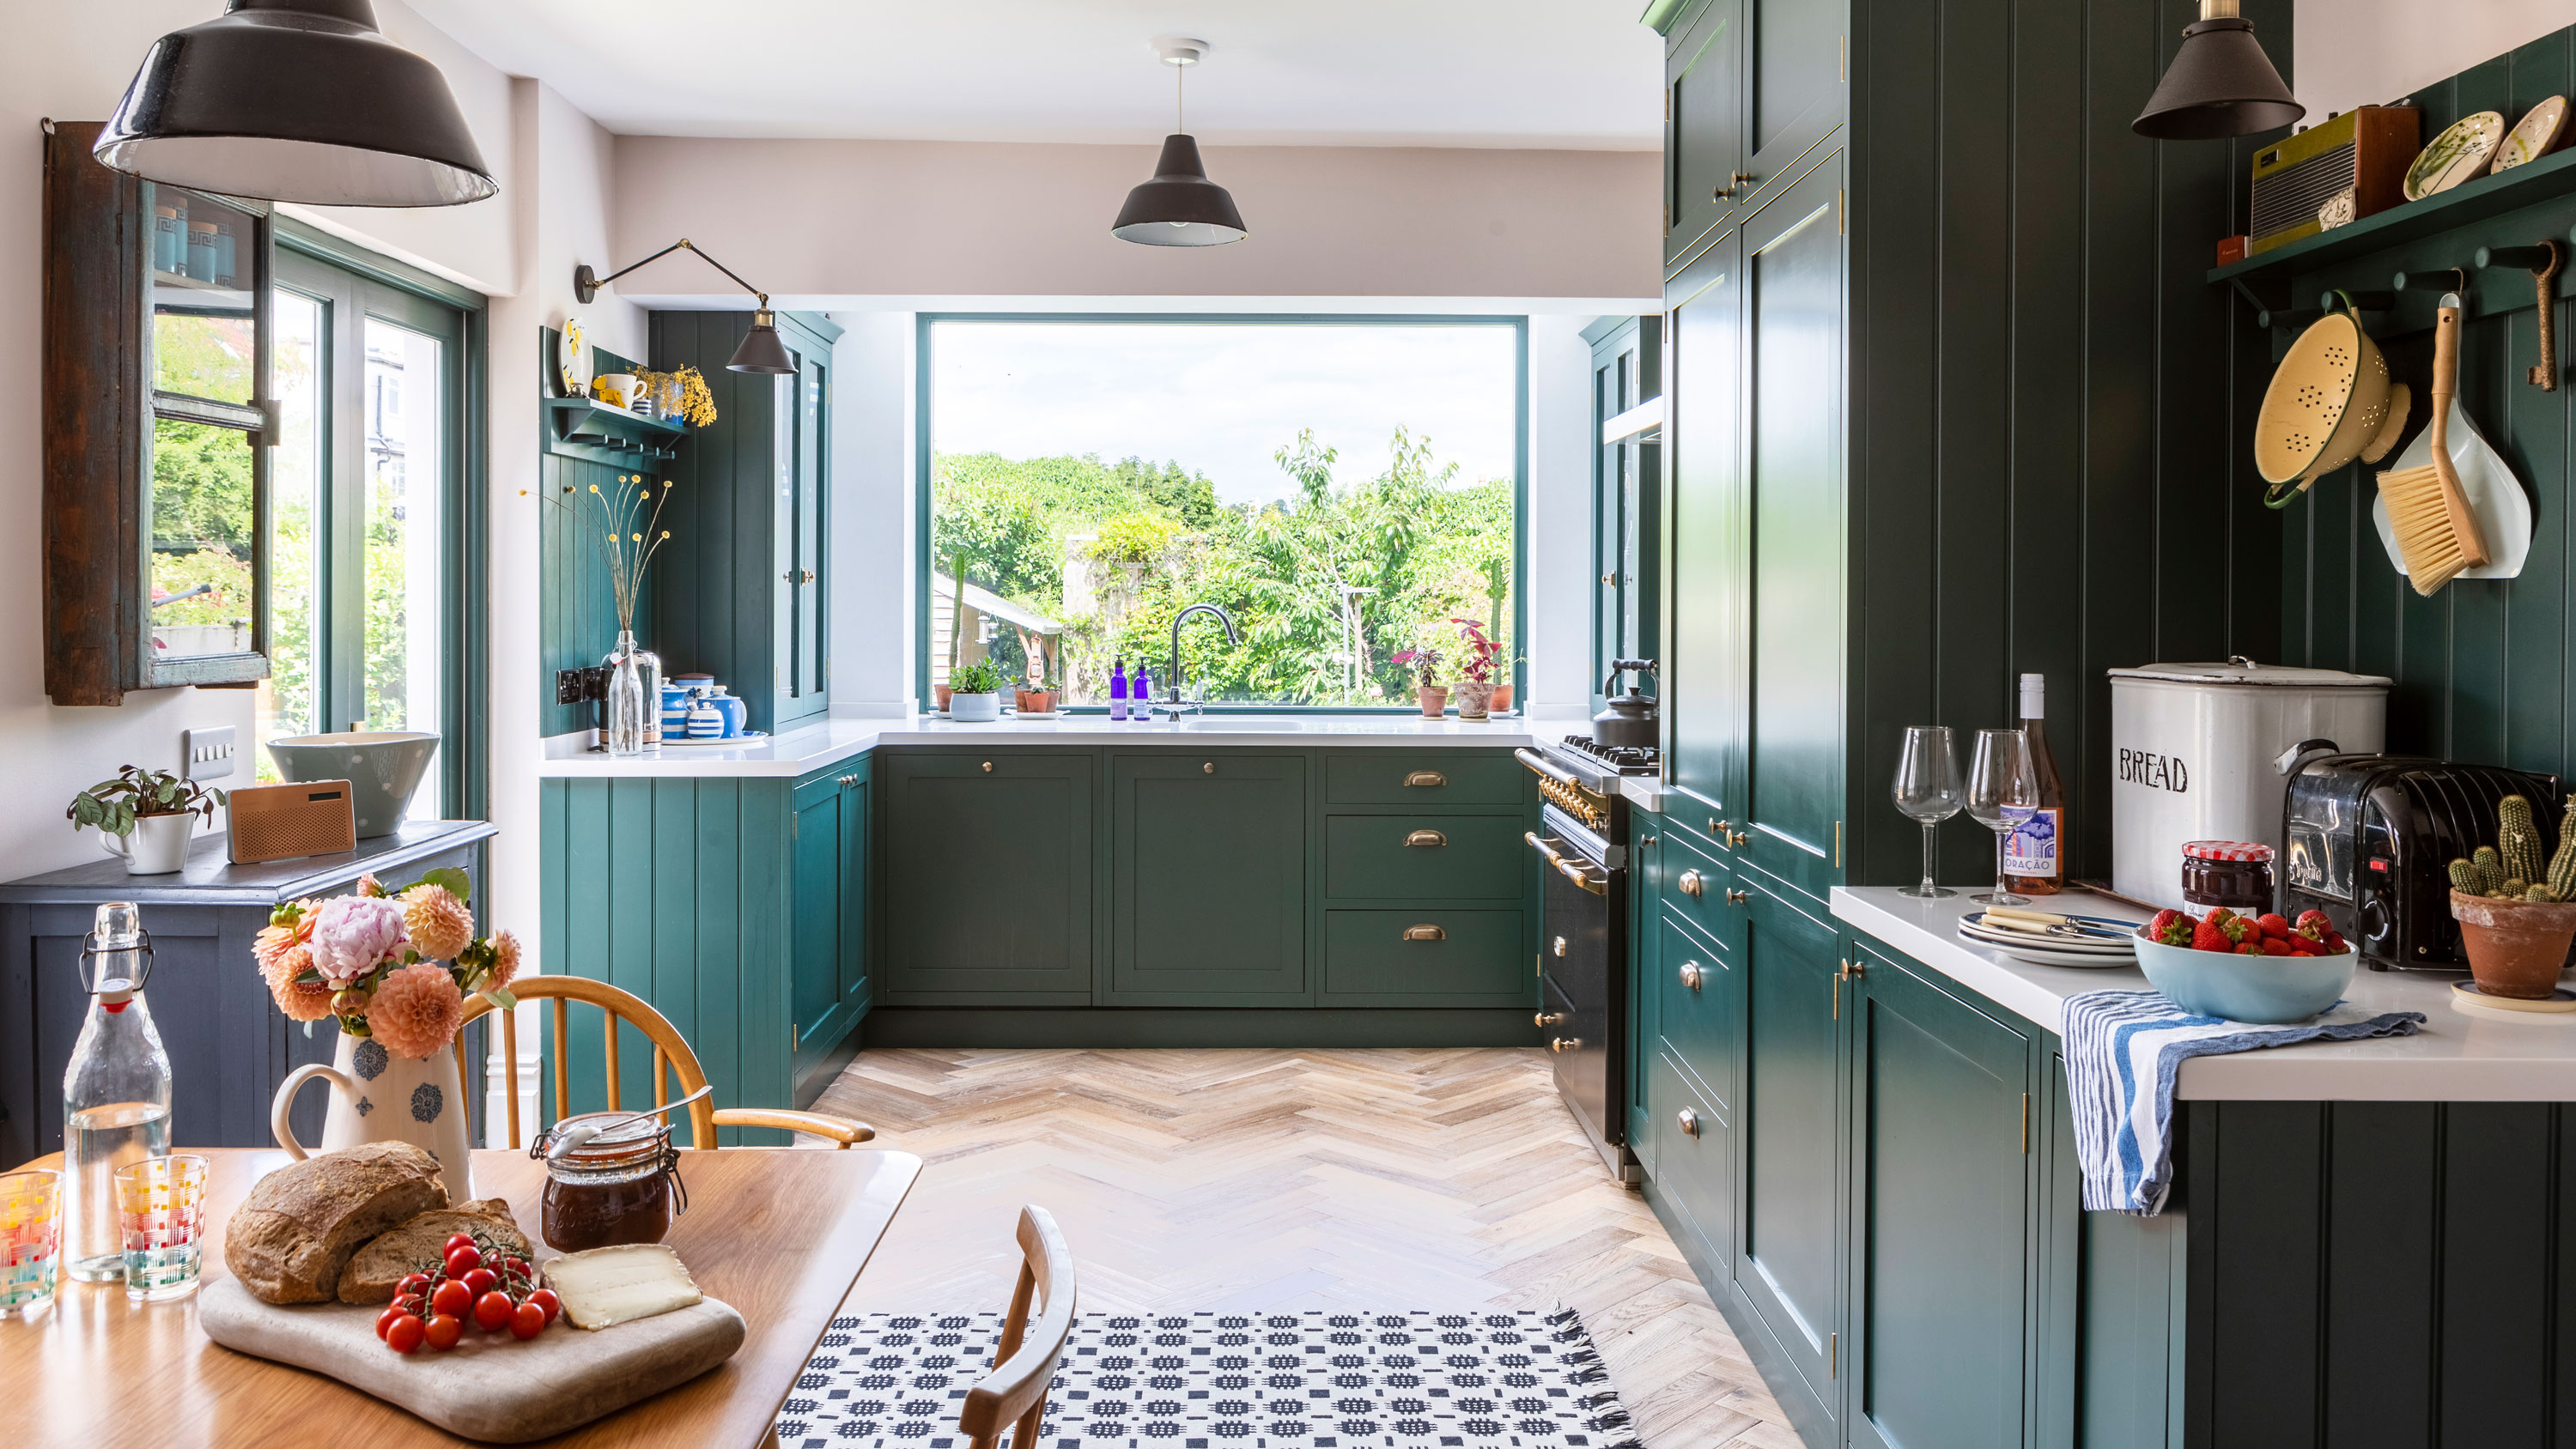 Kitchen color ideas: 37 paint schemes and decor palettes | Real Homes